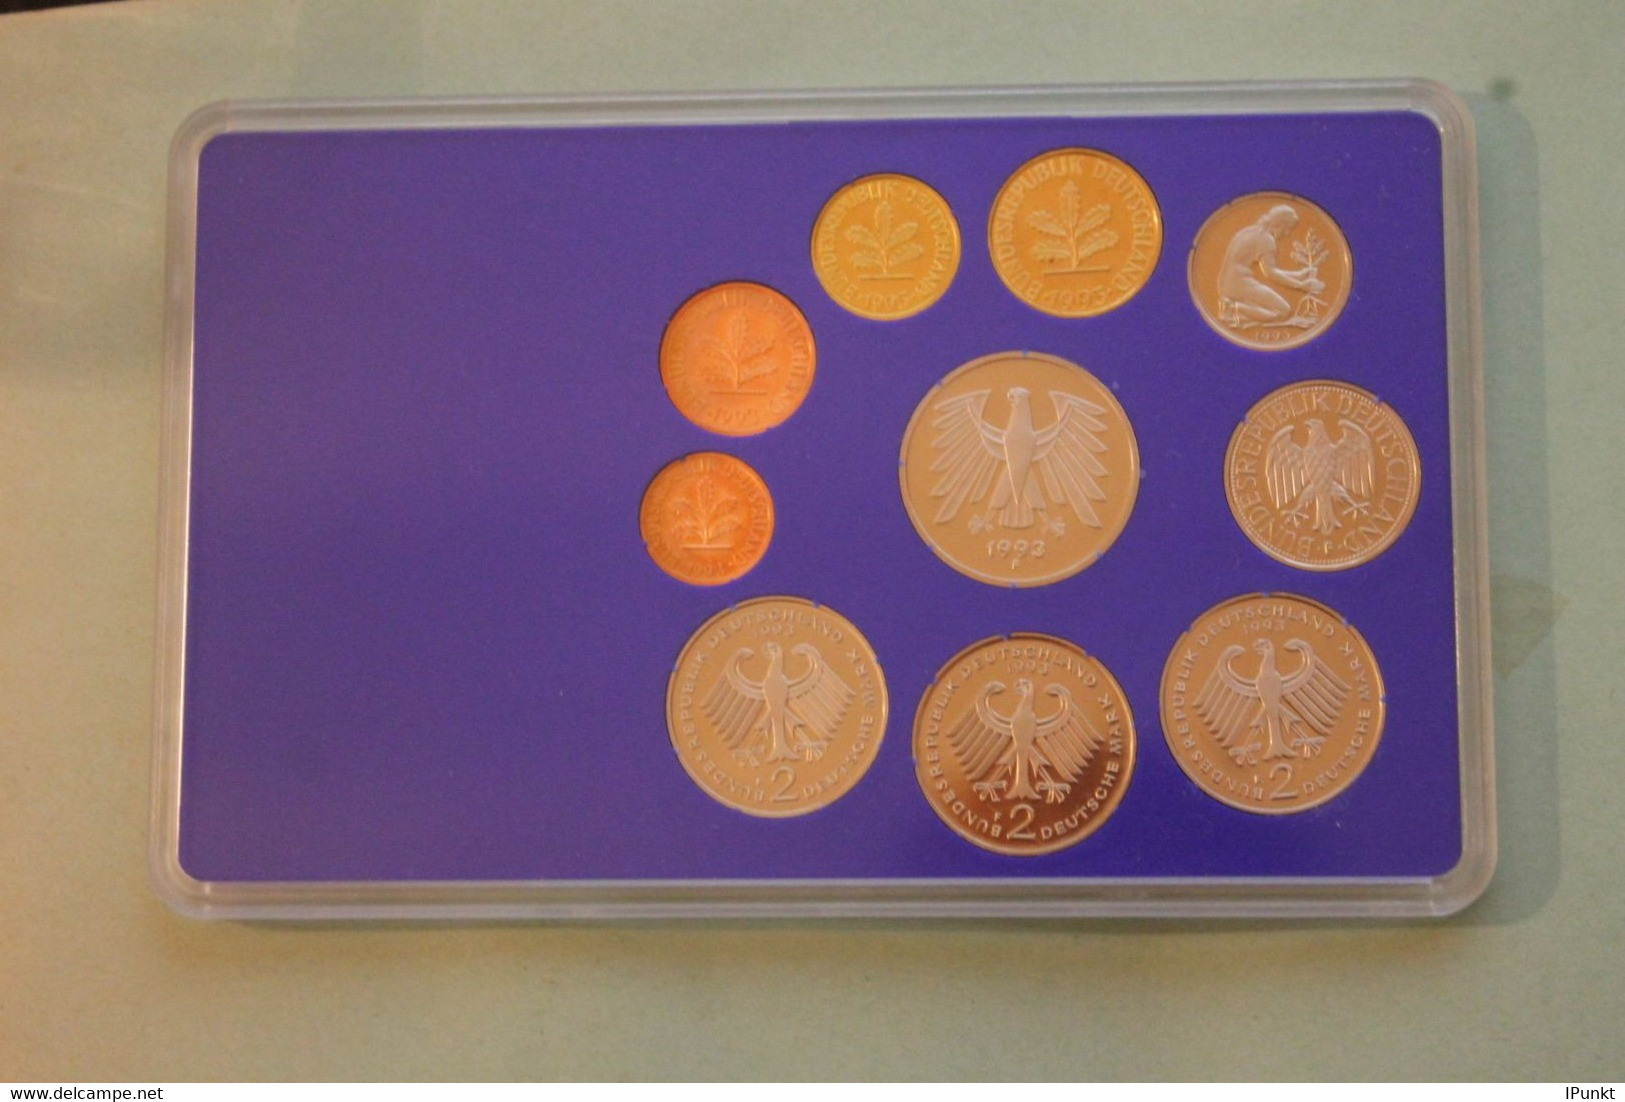 Deutschland, Kursmünzensatz Spiegelglanz (PP), 1993,F - Sets De Acuñados &  Sets De Pruebas